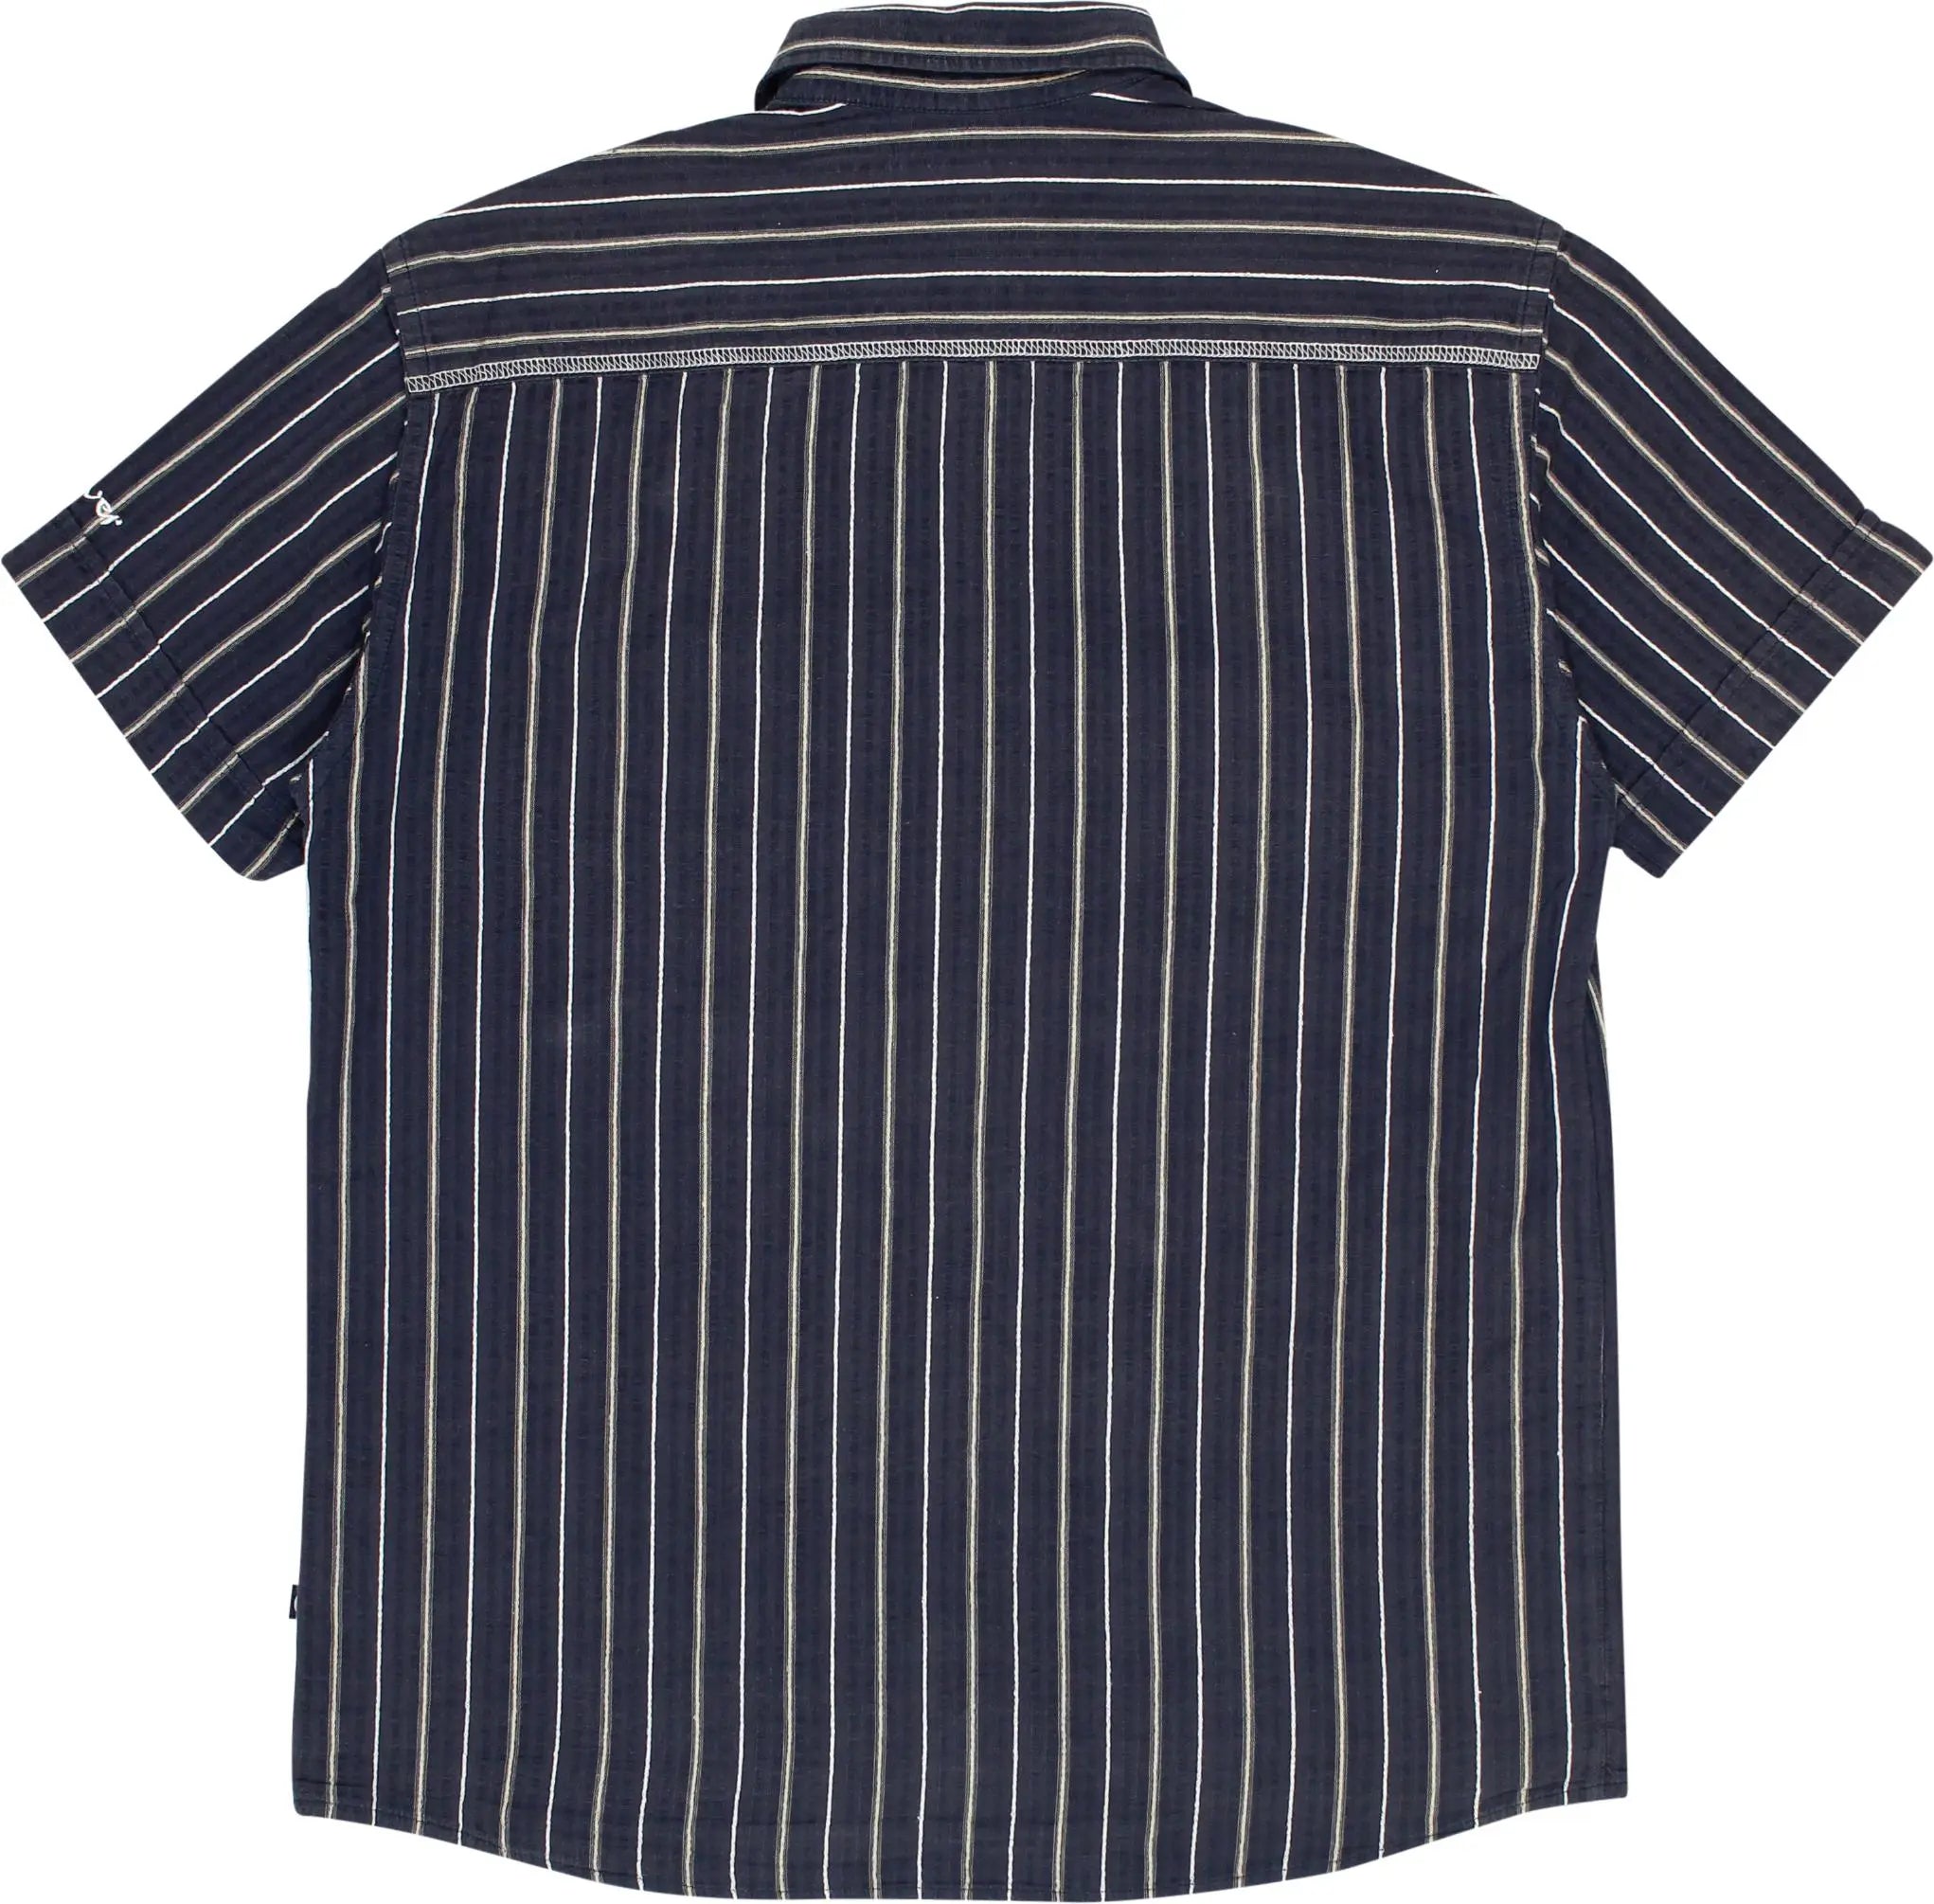 S.Oliver - Short Sleeve Seersucker Shirt- ThriftTale.com - Vintage and second handclothing